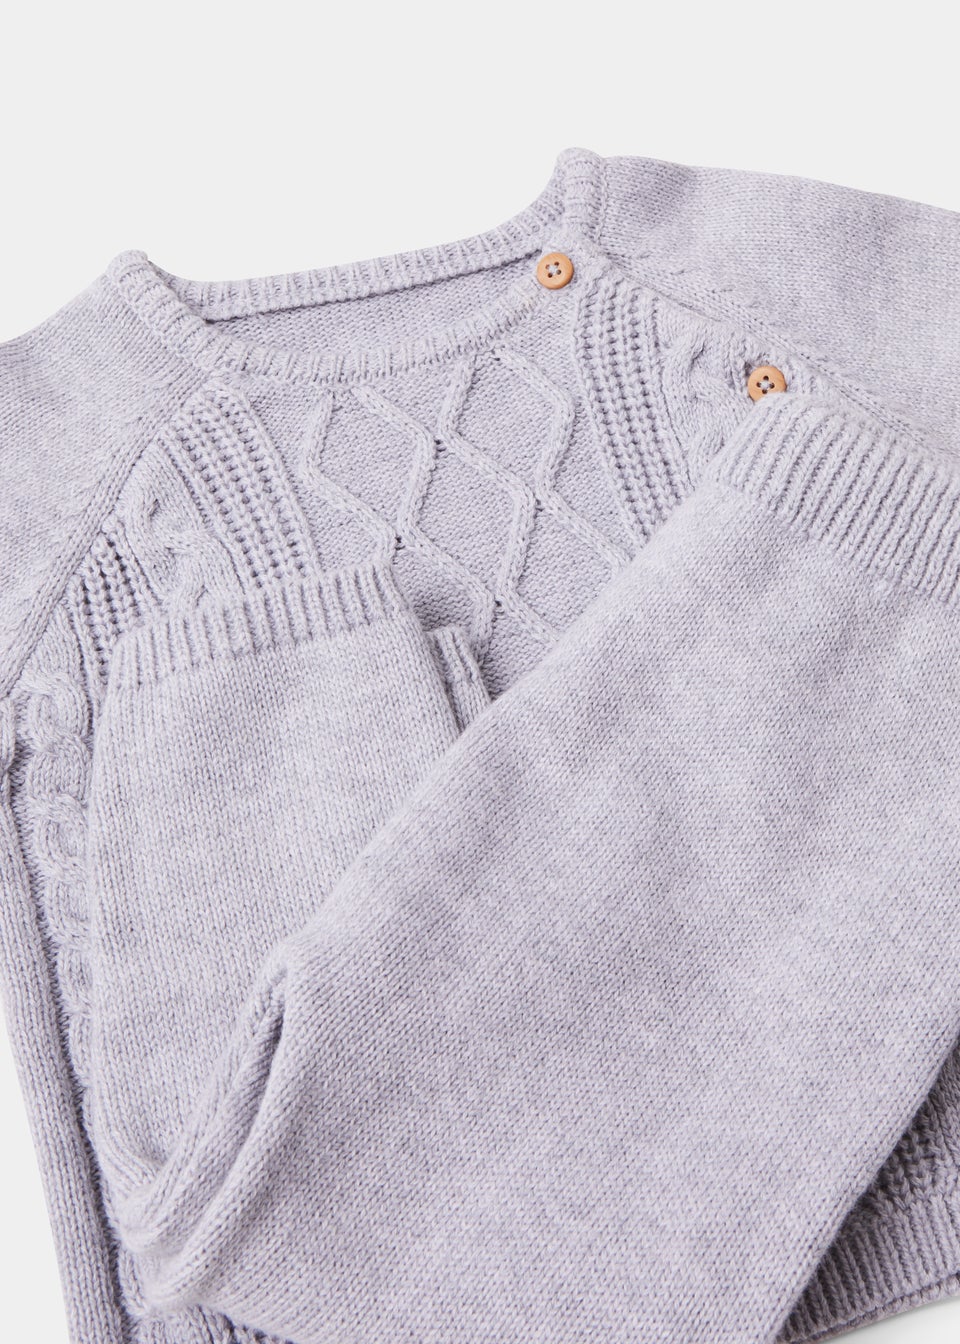 Baby Grey Cable Knit Sweatshirt & Leggings Set (Newborn-23mths)